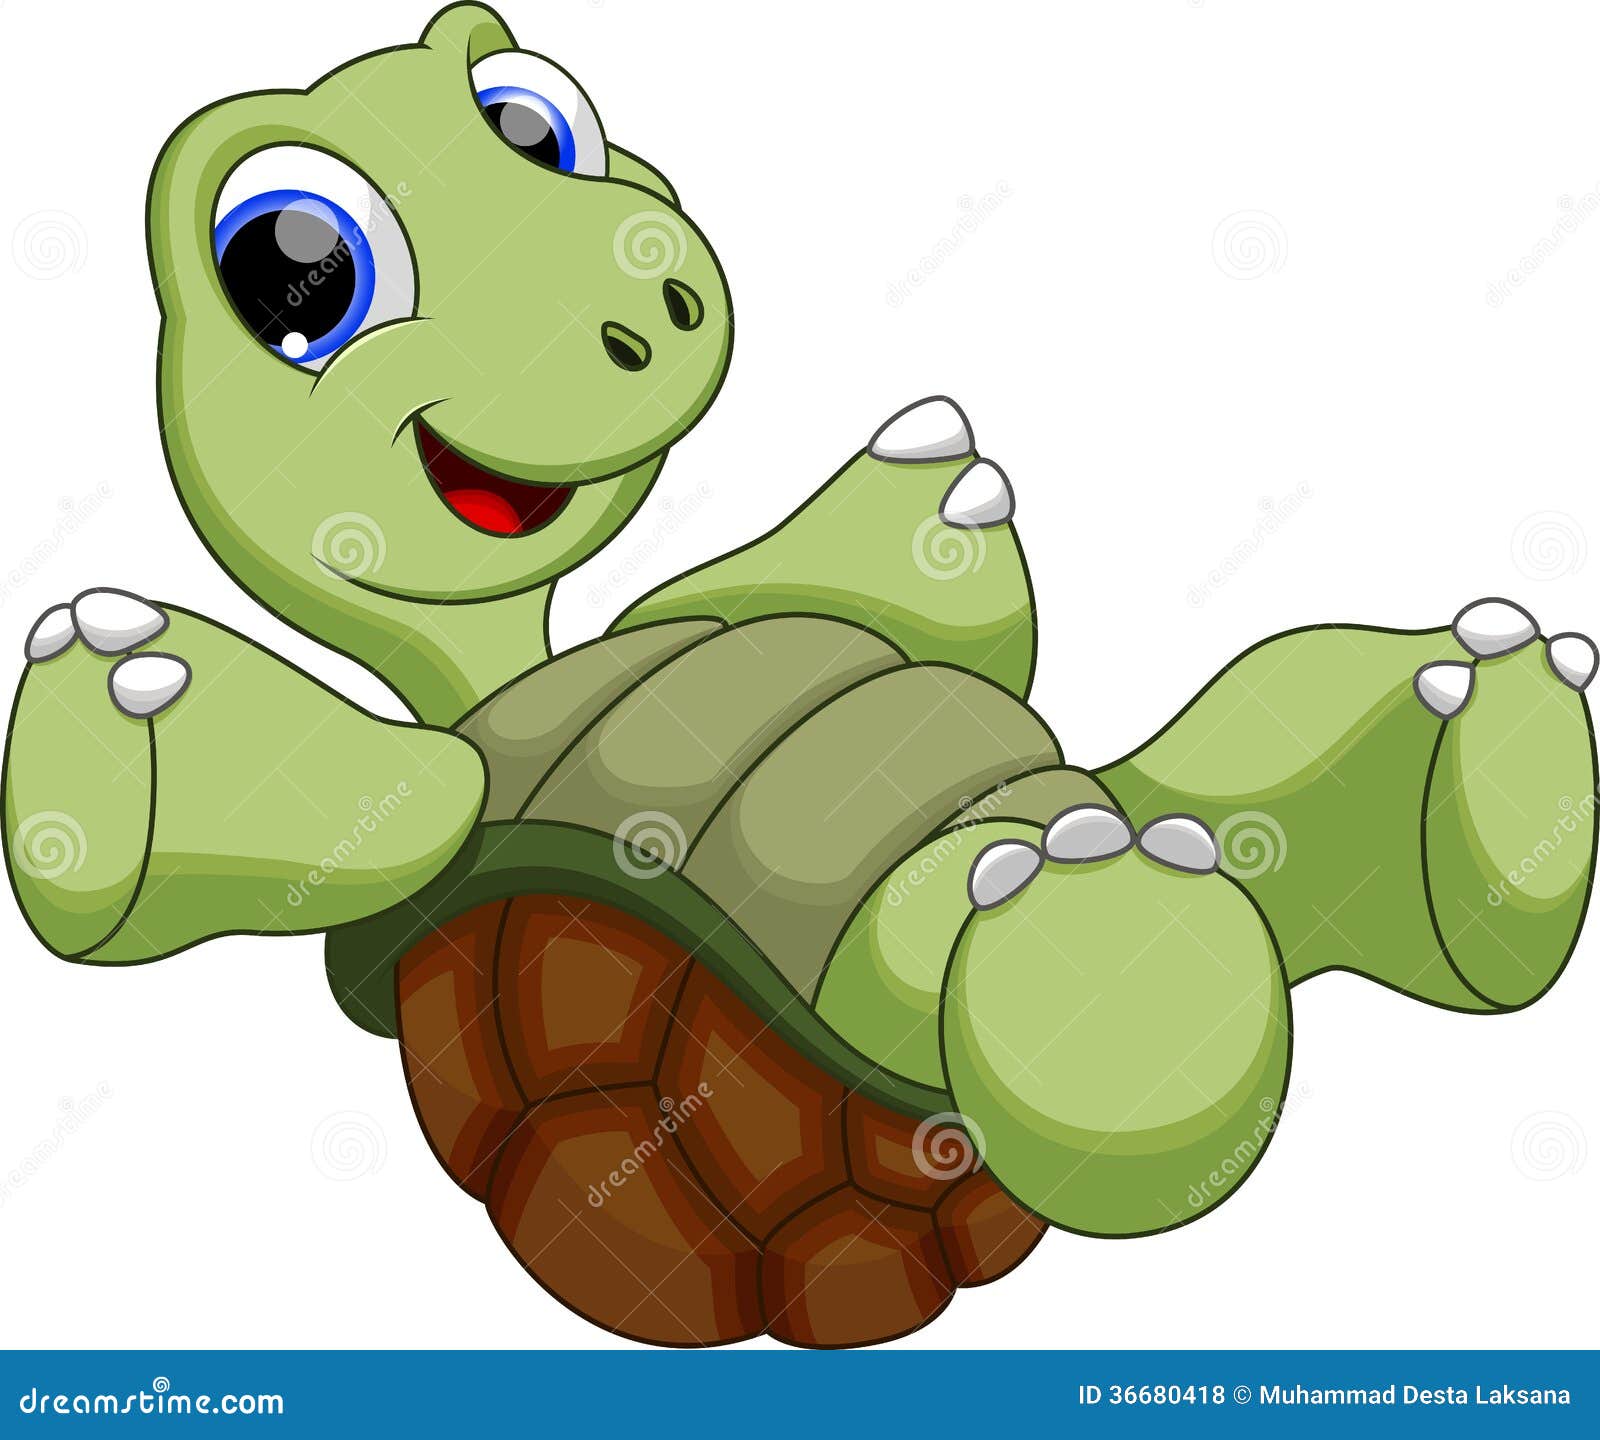 Happy turtle catoon stock illustration. Illustration of figure - 36680418